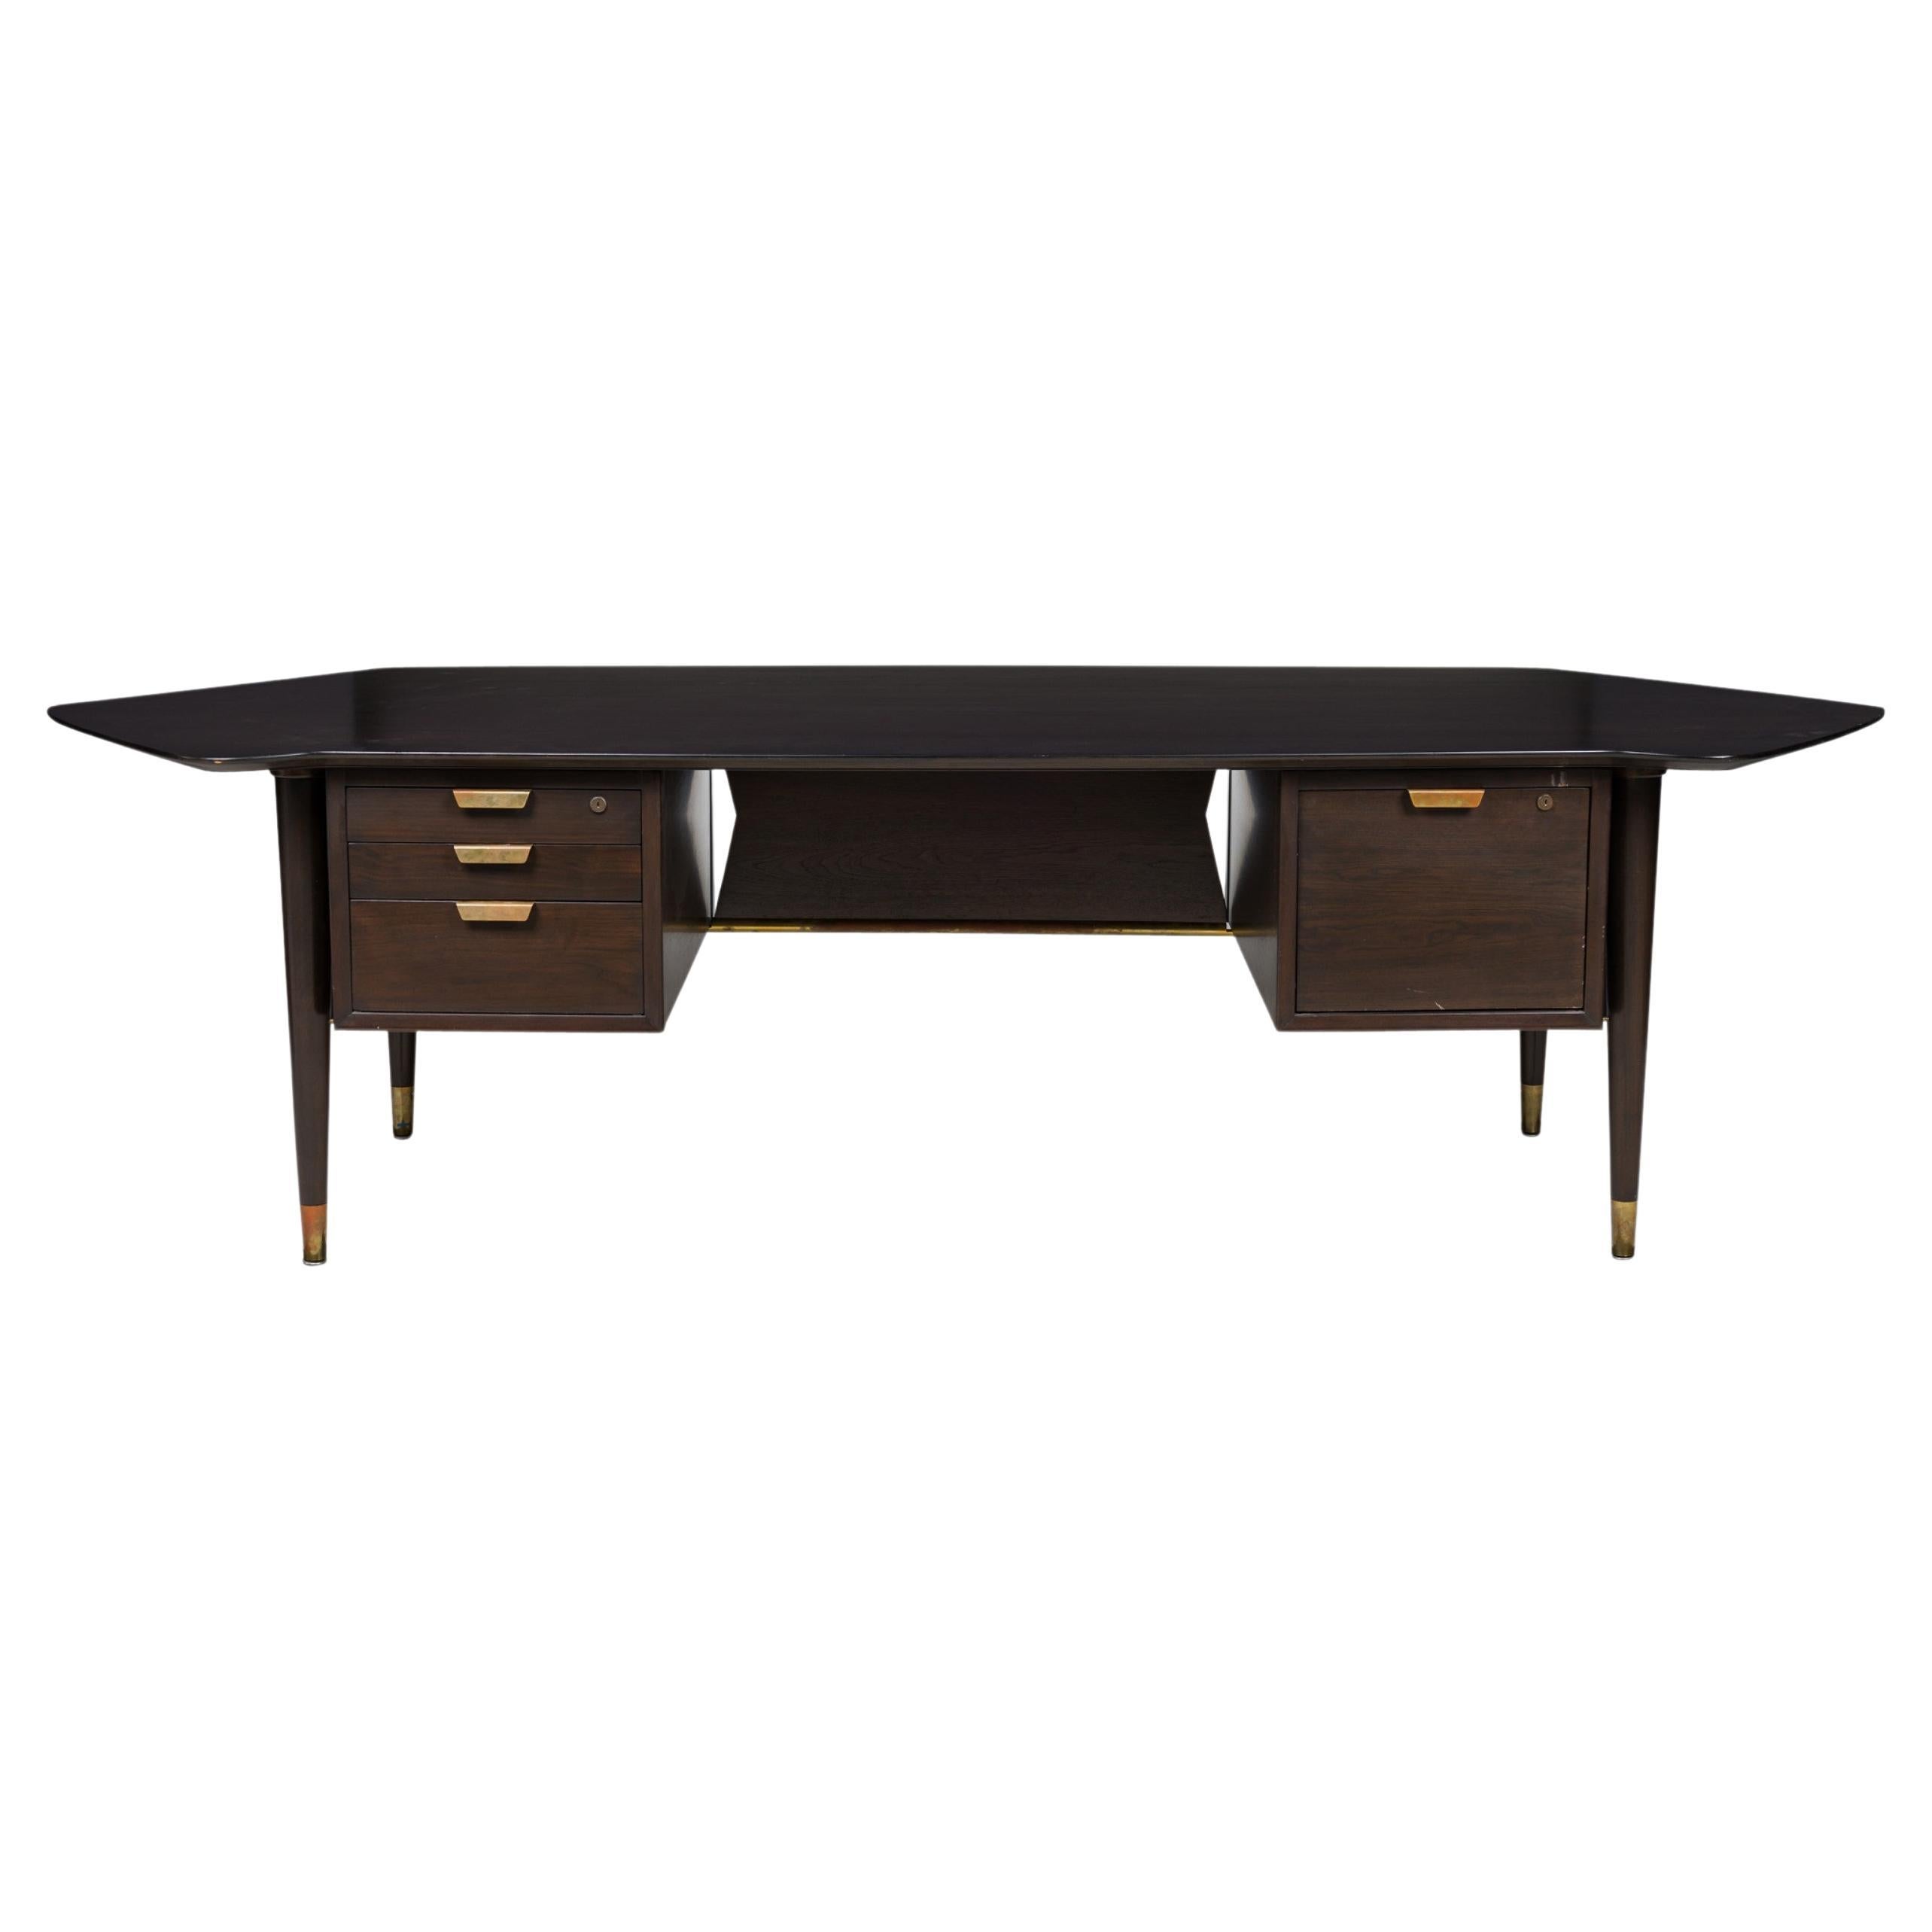 Standard Furniture Co. American Dark Wood Veneer & Brass Executive Desk For Sale